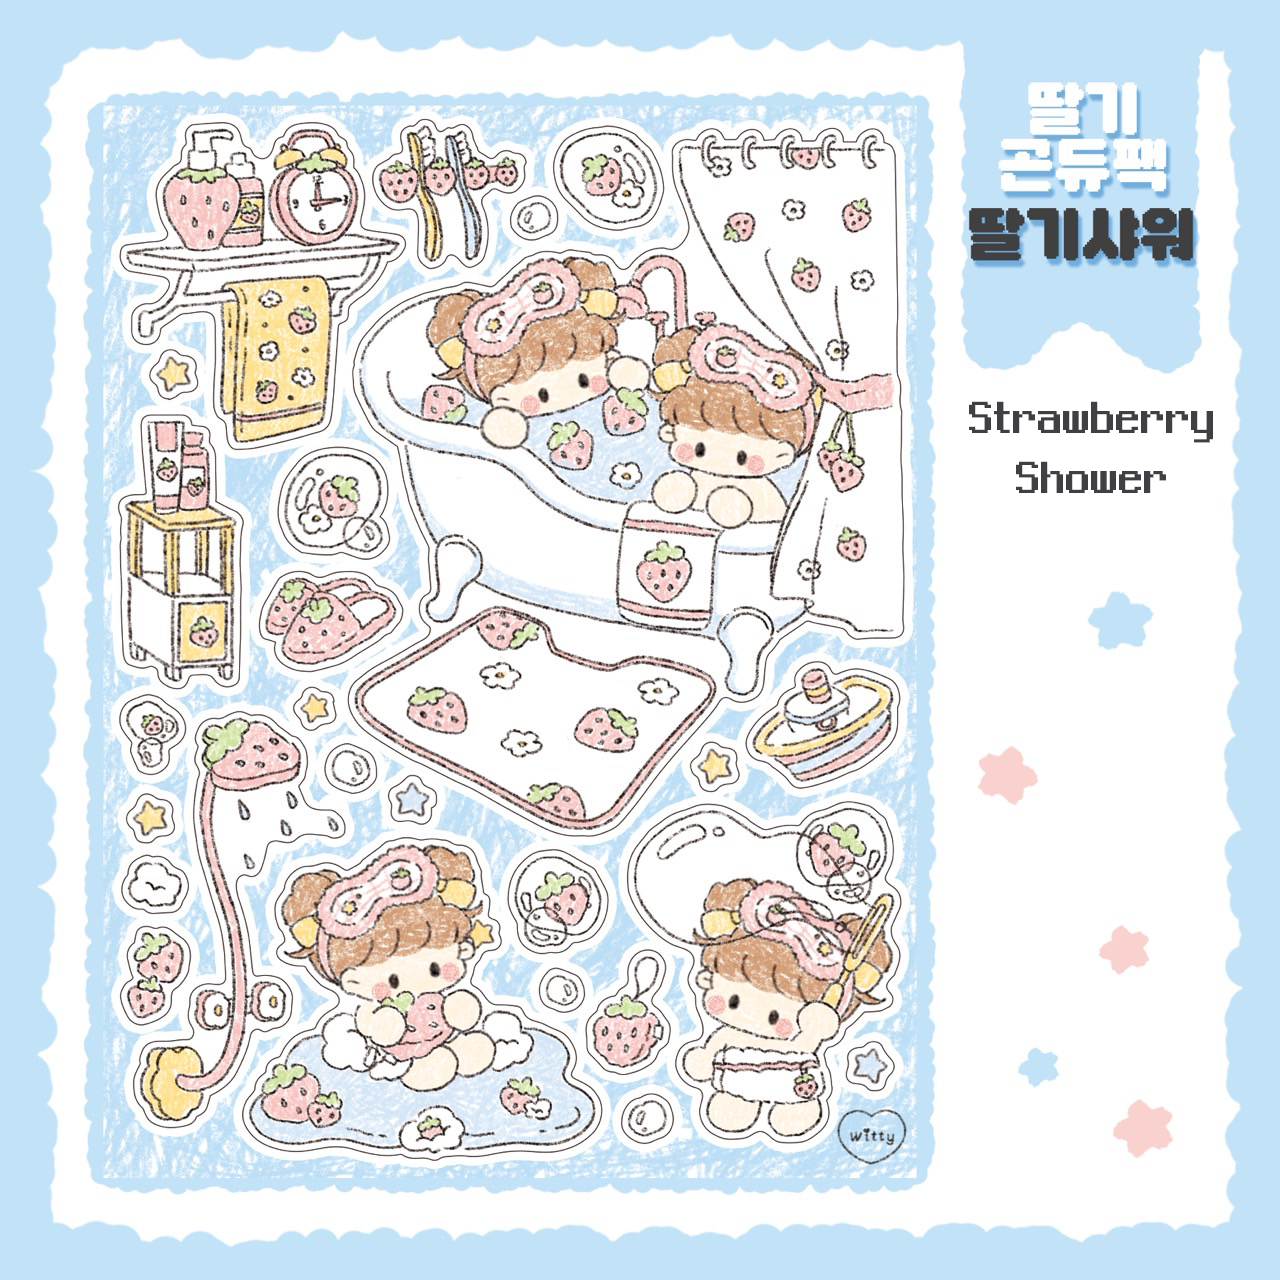 [Danchoo] Strawberry Princess Sticker Pack (Pack/Singles)